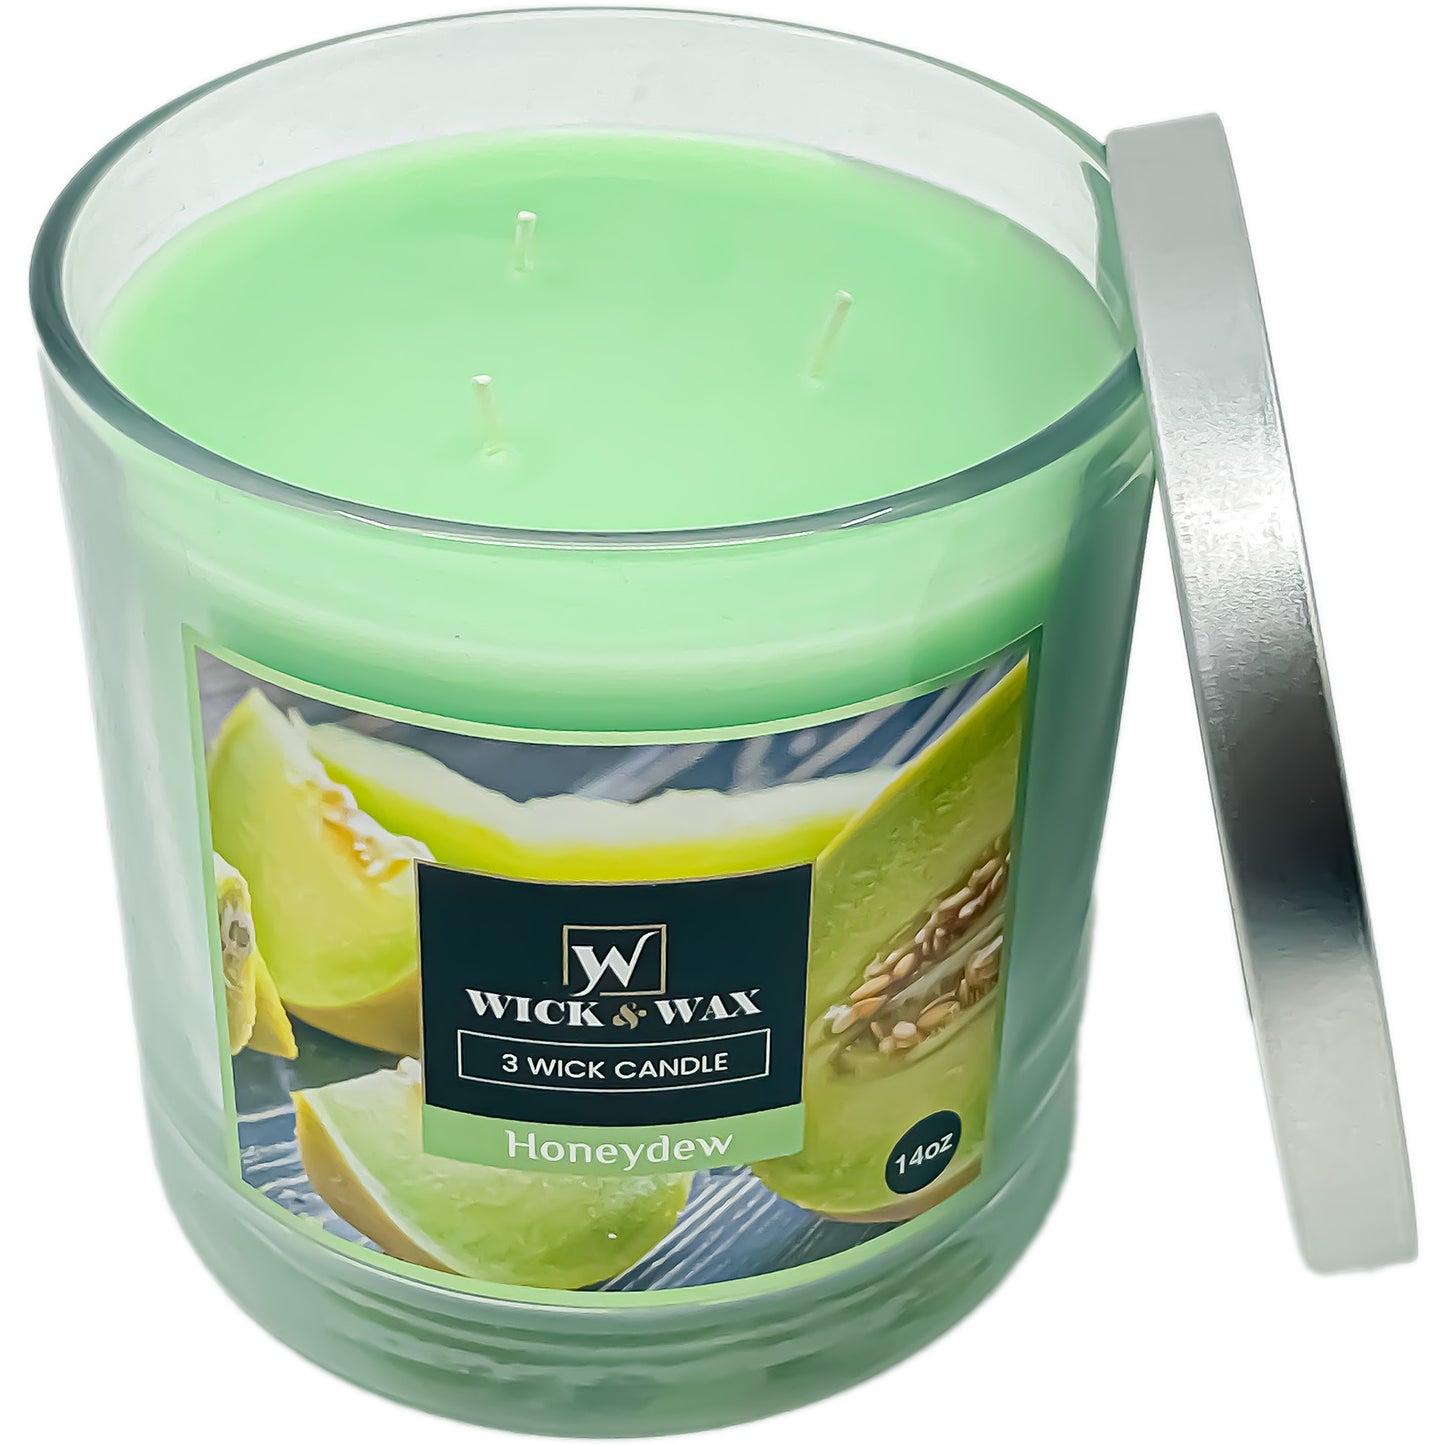 Honeydew Scented Jar Candle (3-wick) - 14oz.  WICK & WAX   